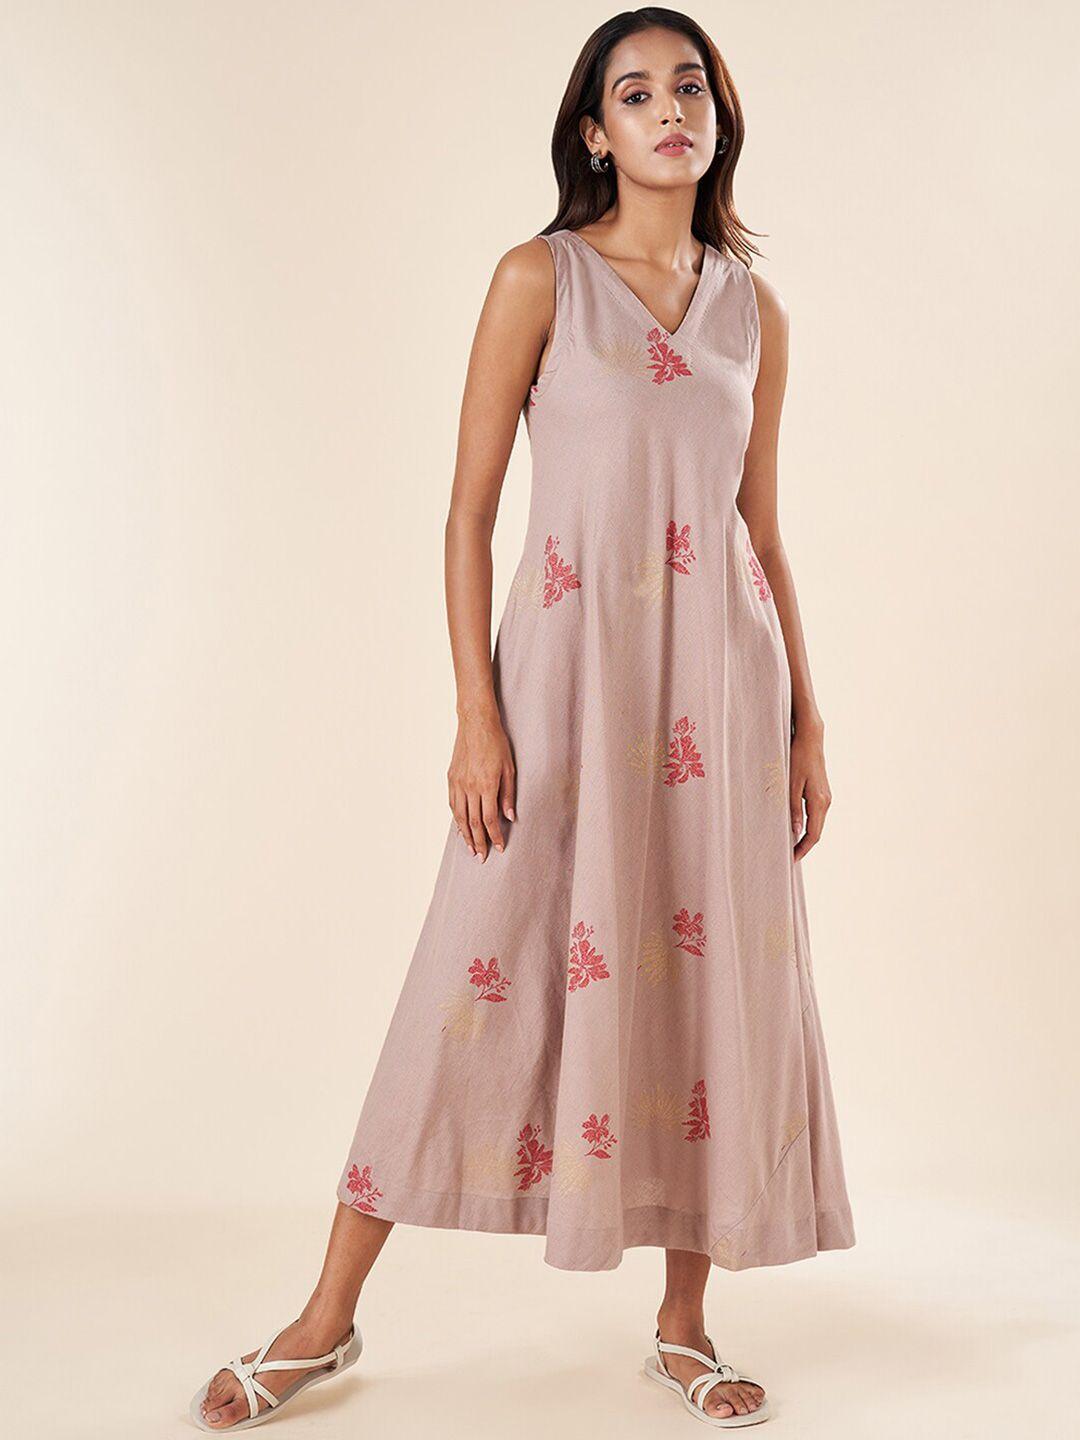 akkriti by pantaloons floral printed v-neck sleeveless cotton a-line midi dress